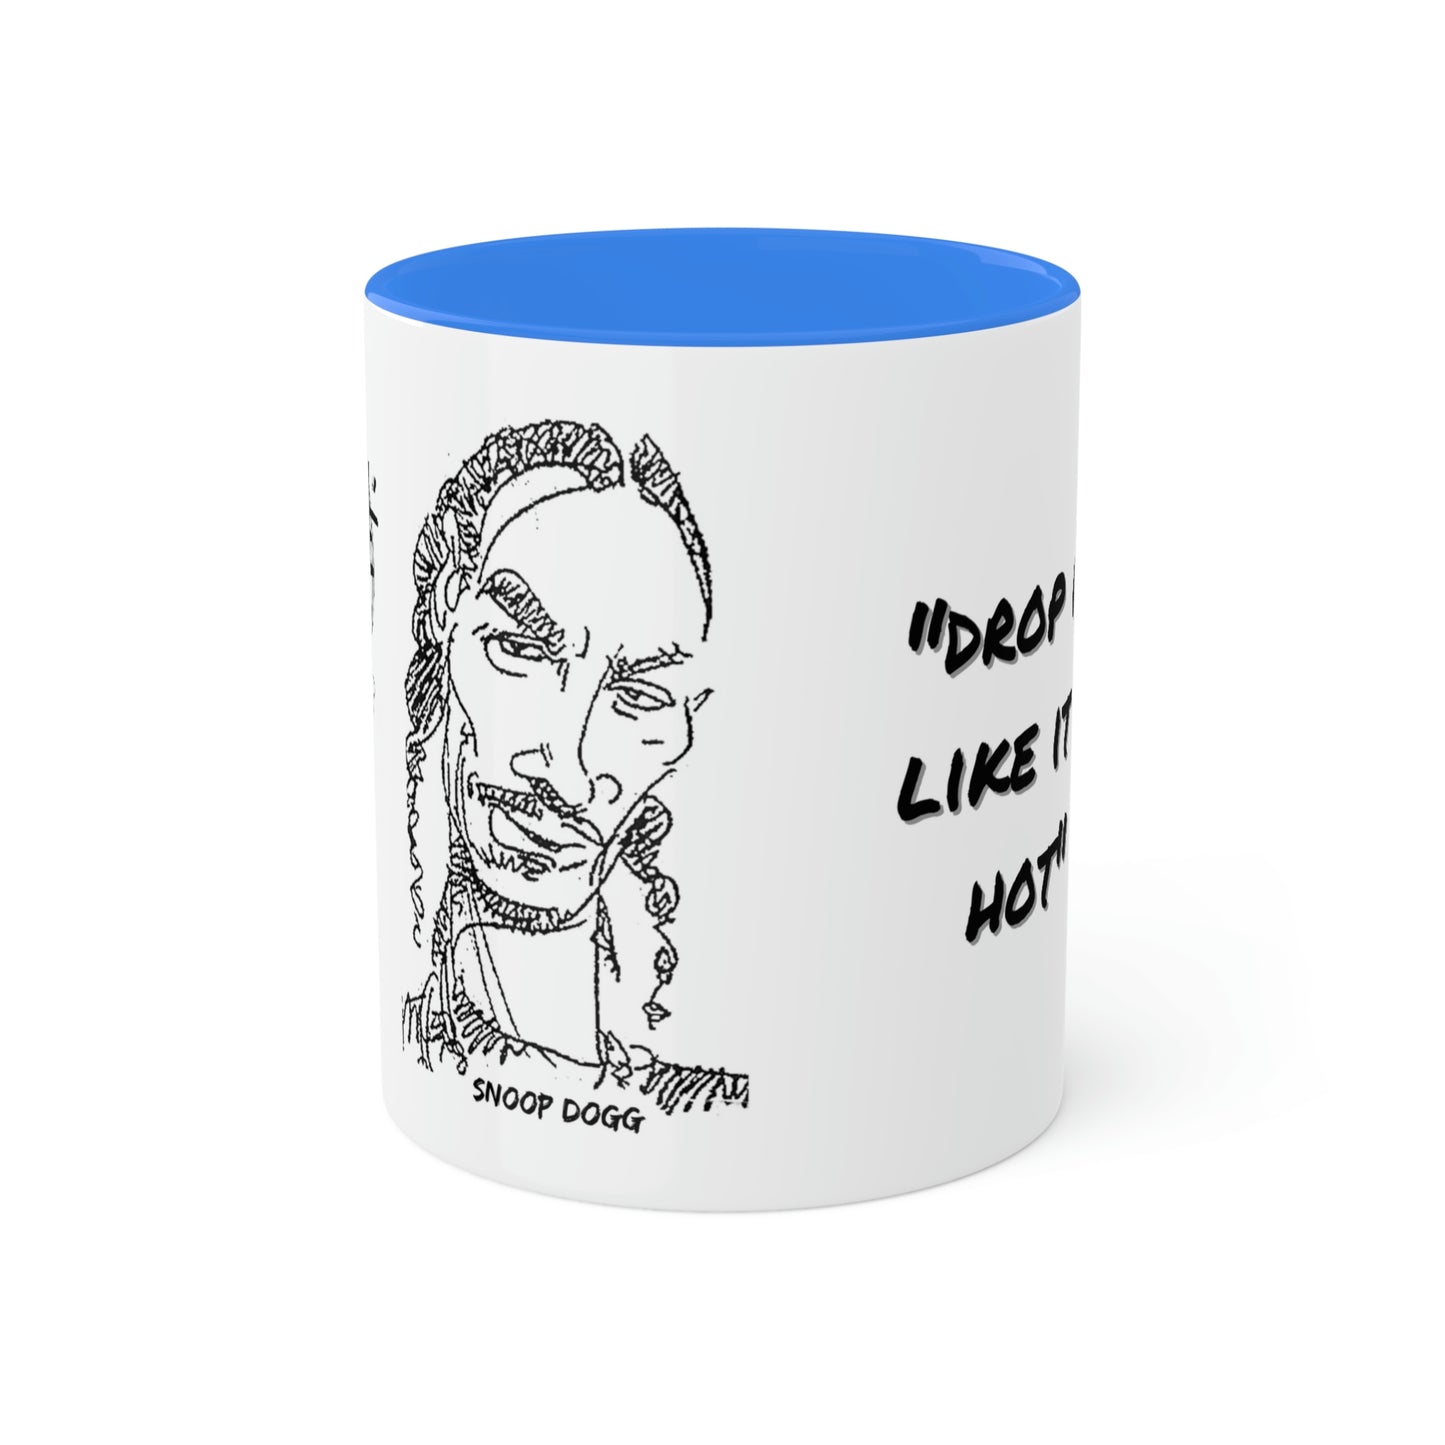 Snoop Dogg #DropItLikeItsHot - Colorful Mugs, 11oz